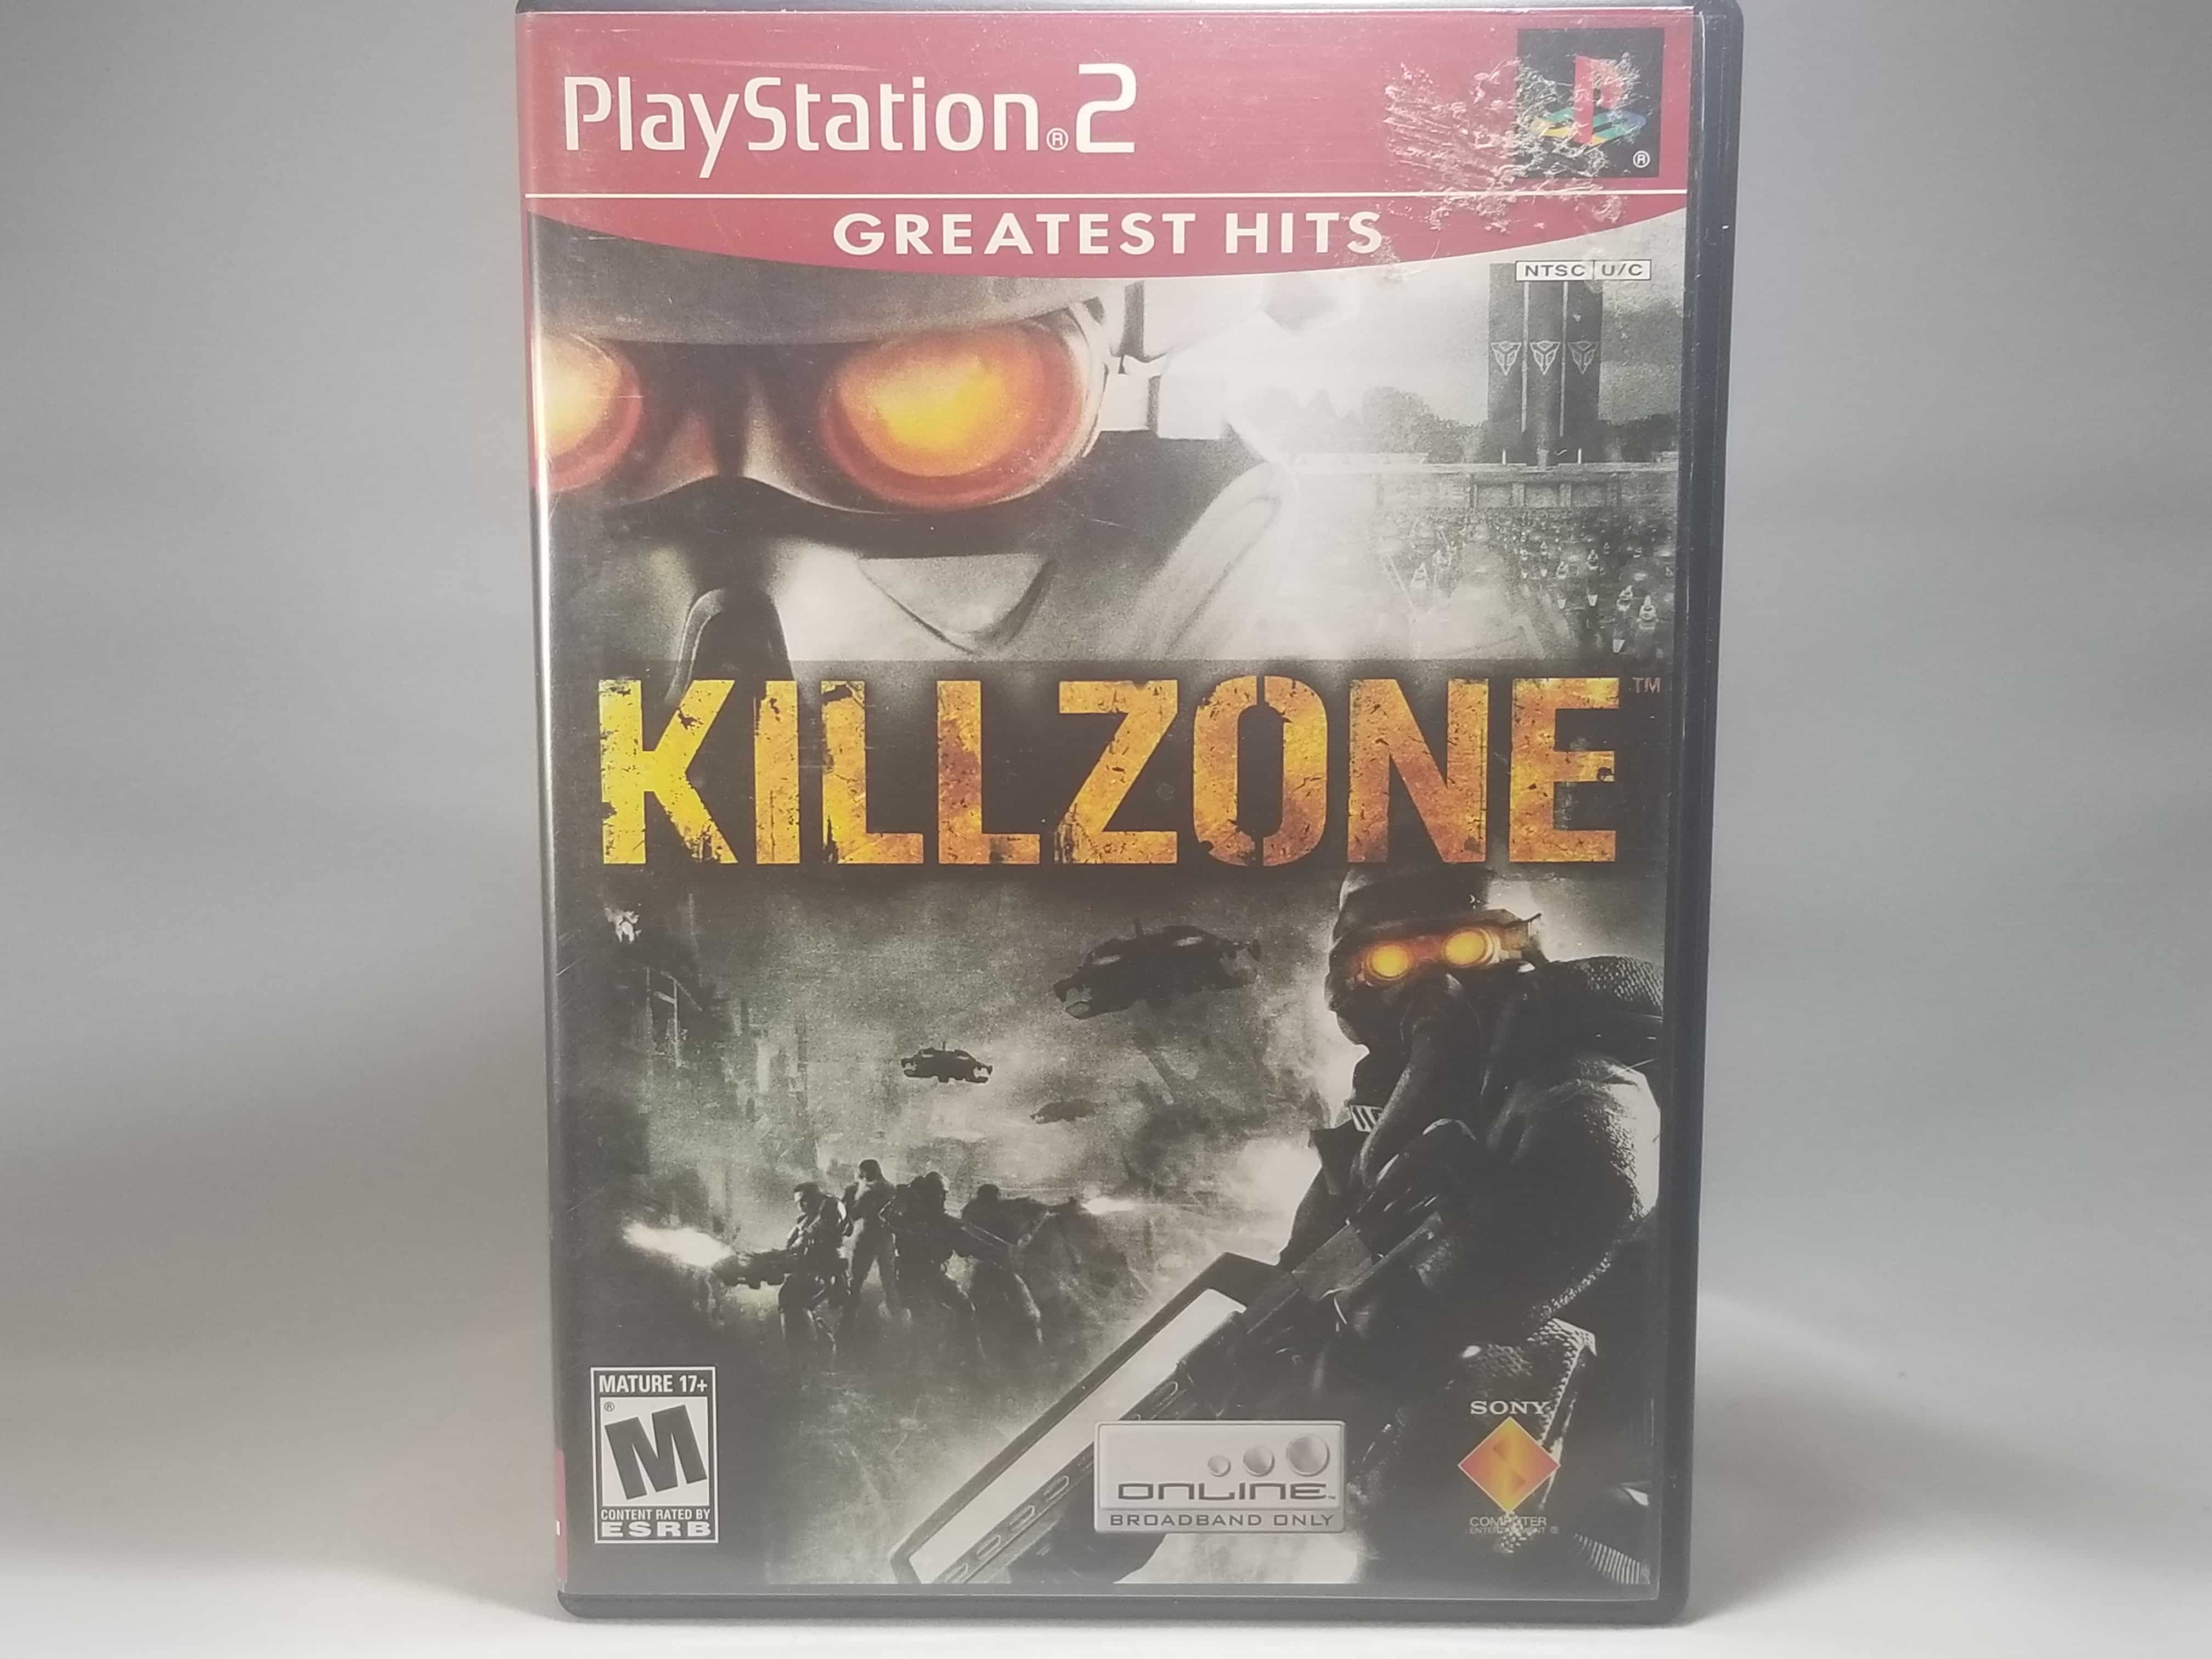 Killzone - PS2 - Review